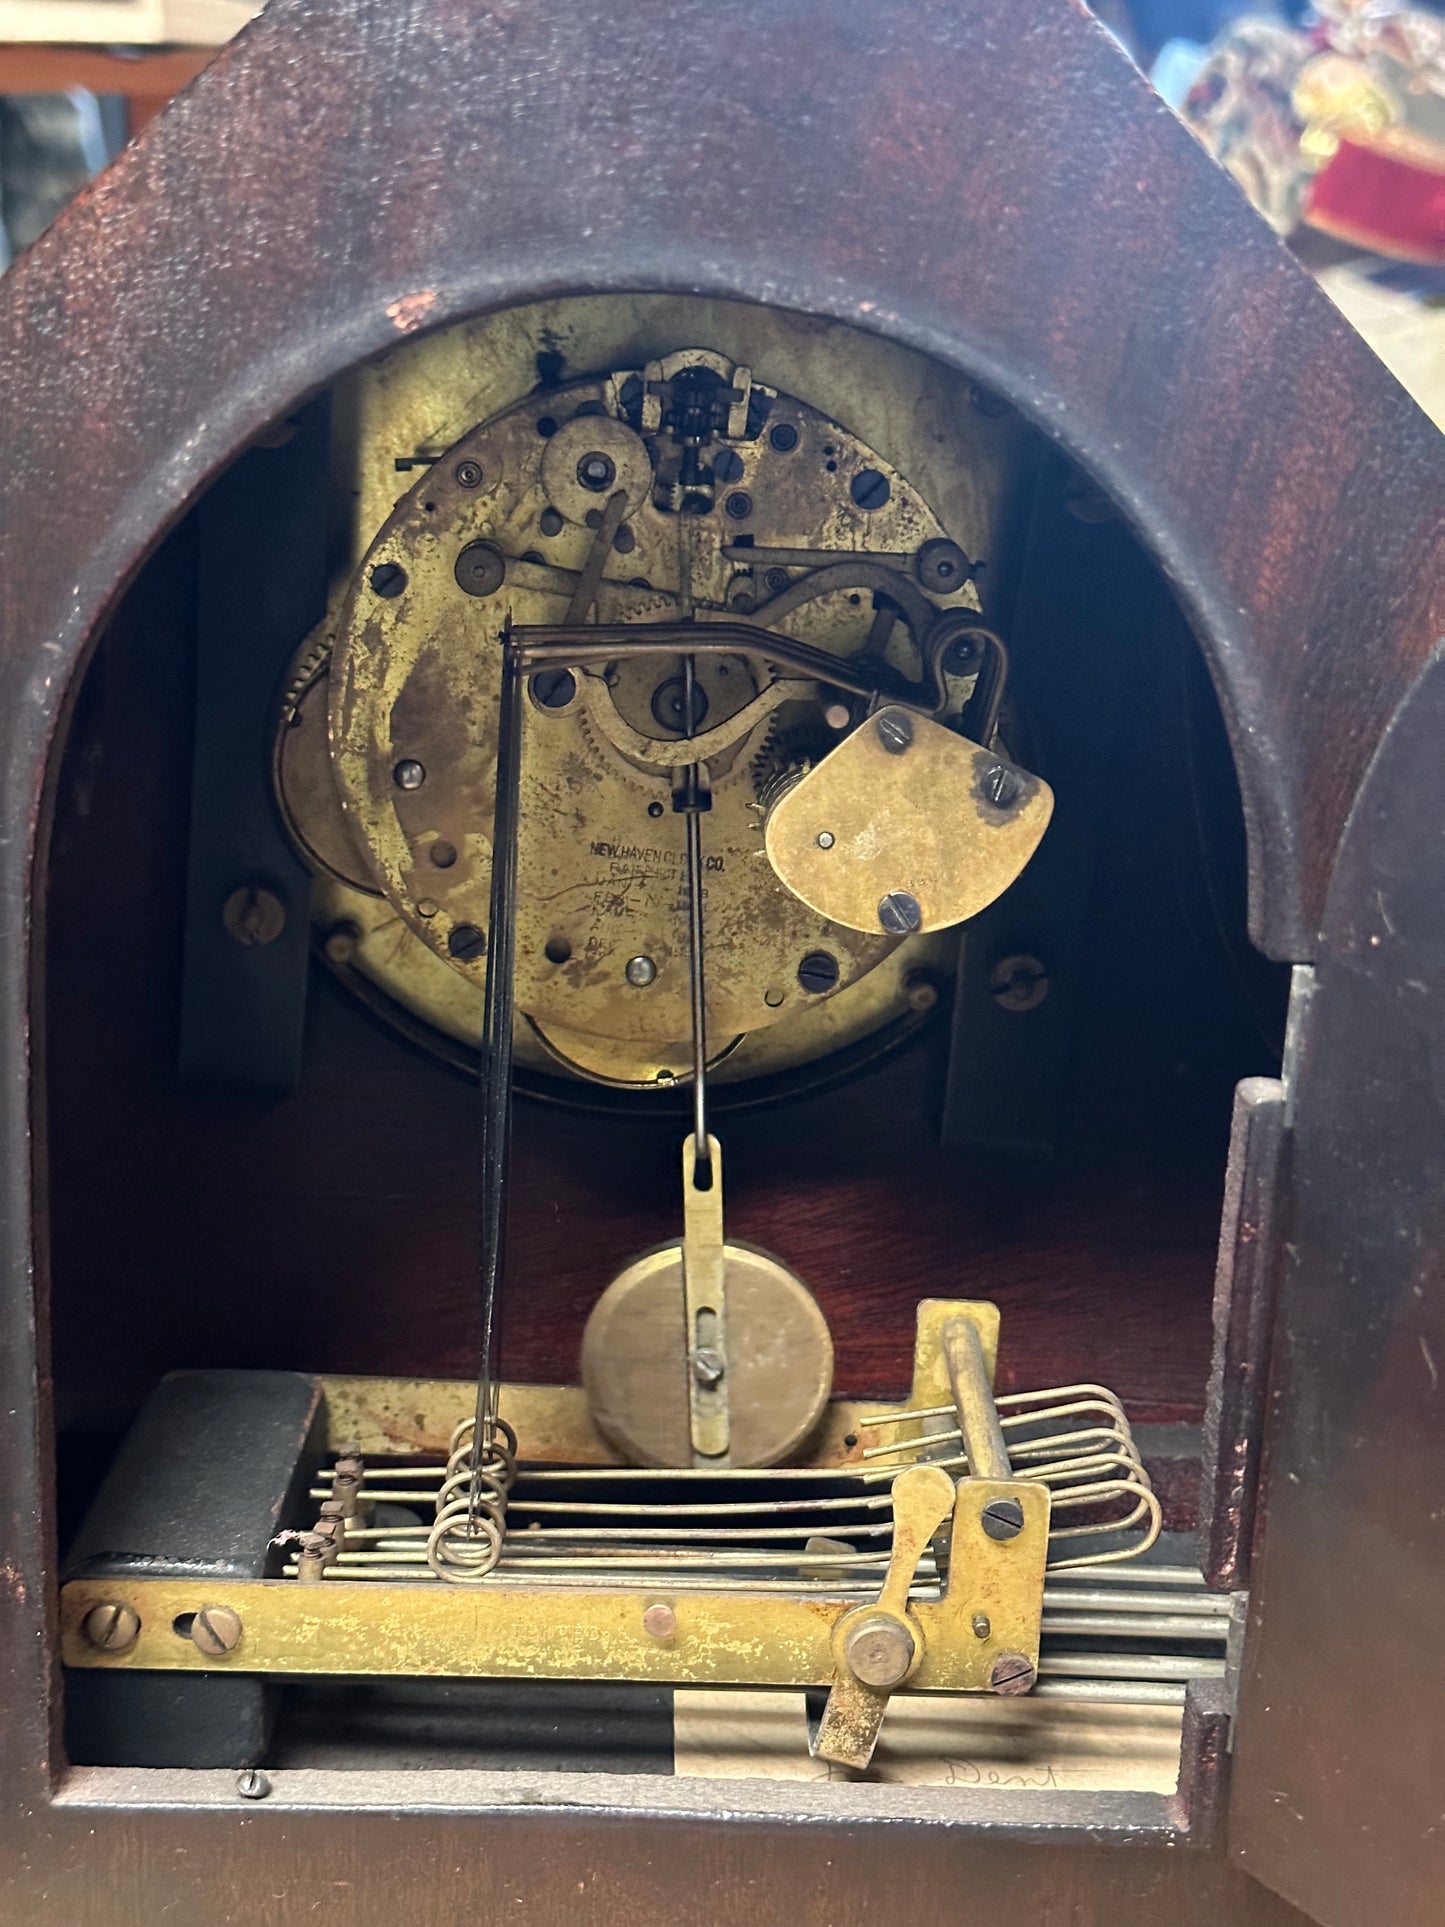 Antique, New Haven, Black, Mantel Clock, Mechanical, Key Wound, Tambor Model, 20 Inch, 1920's, WORKS